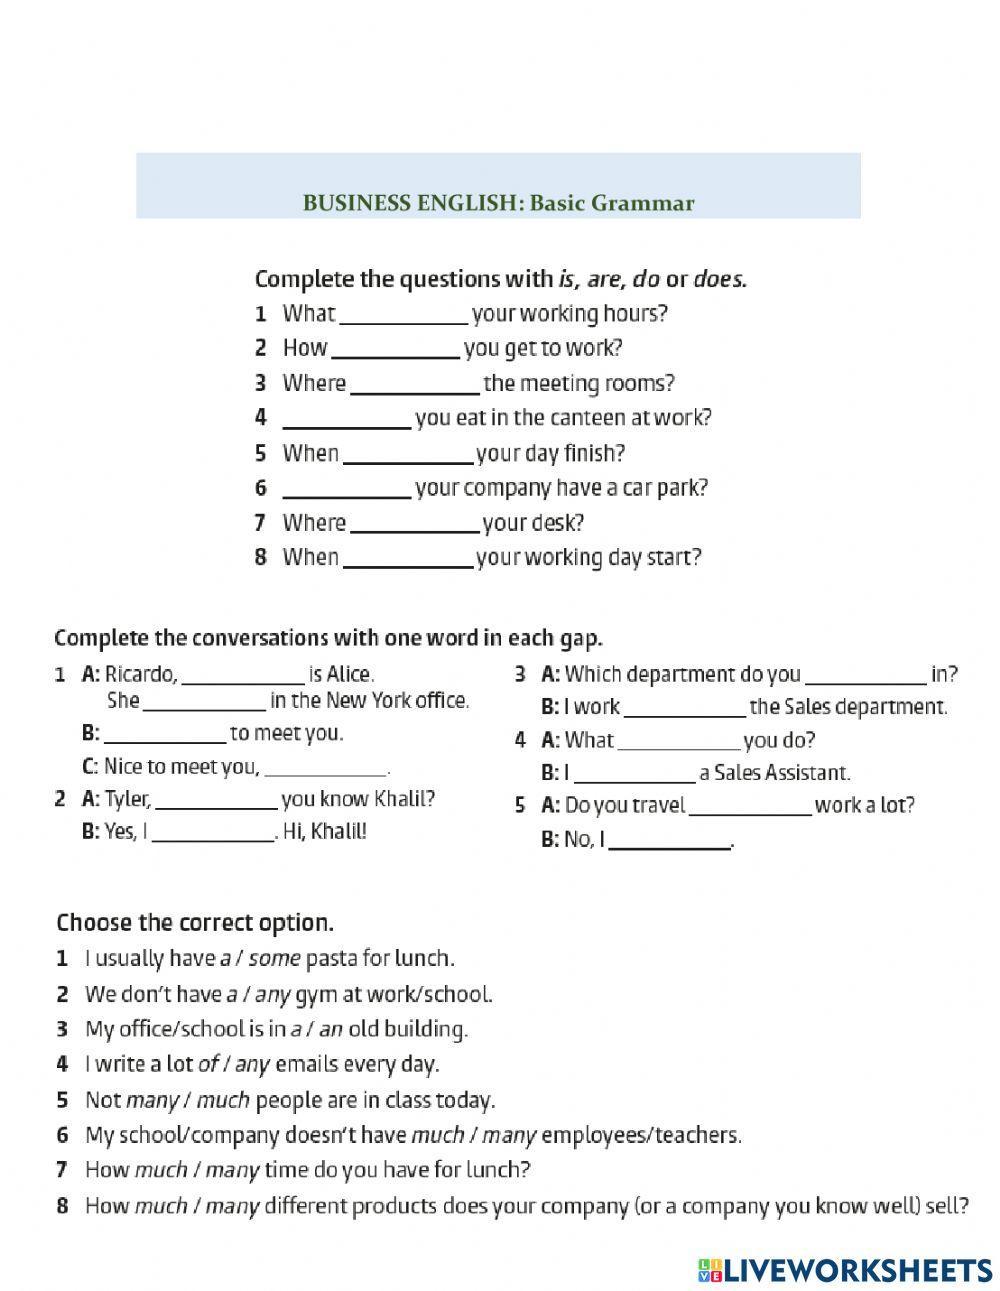 Business English: Basic Grammar I